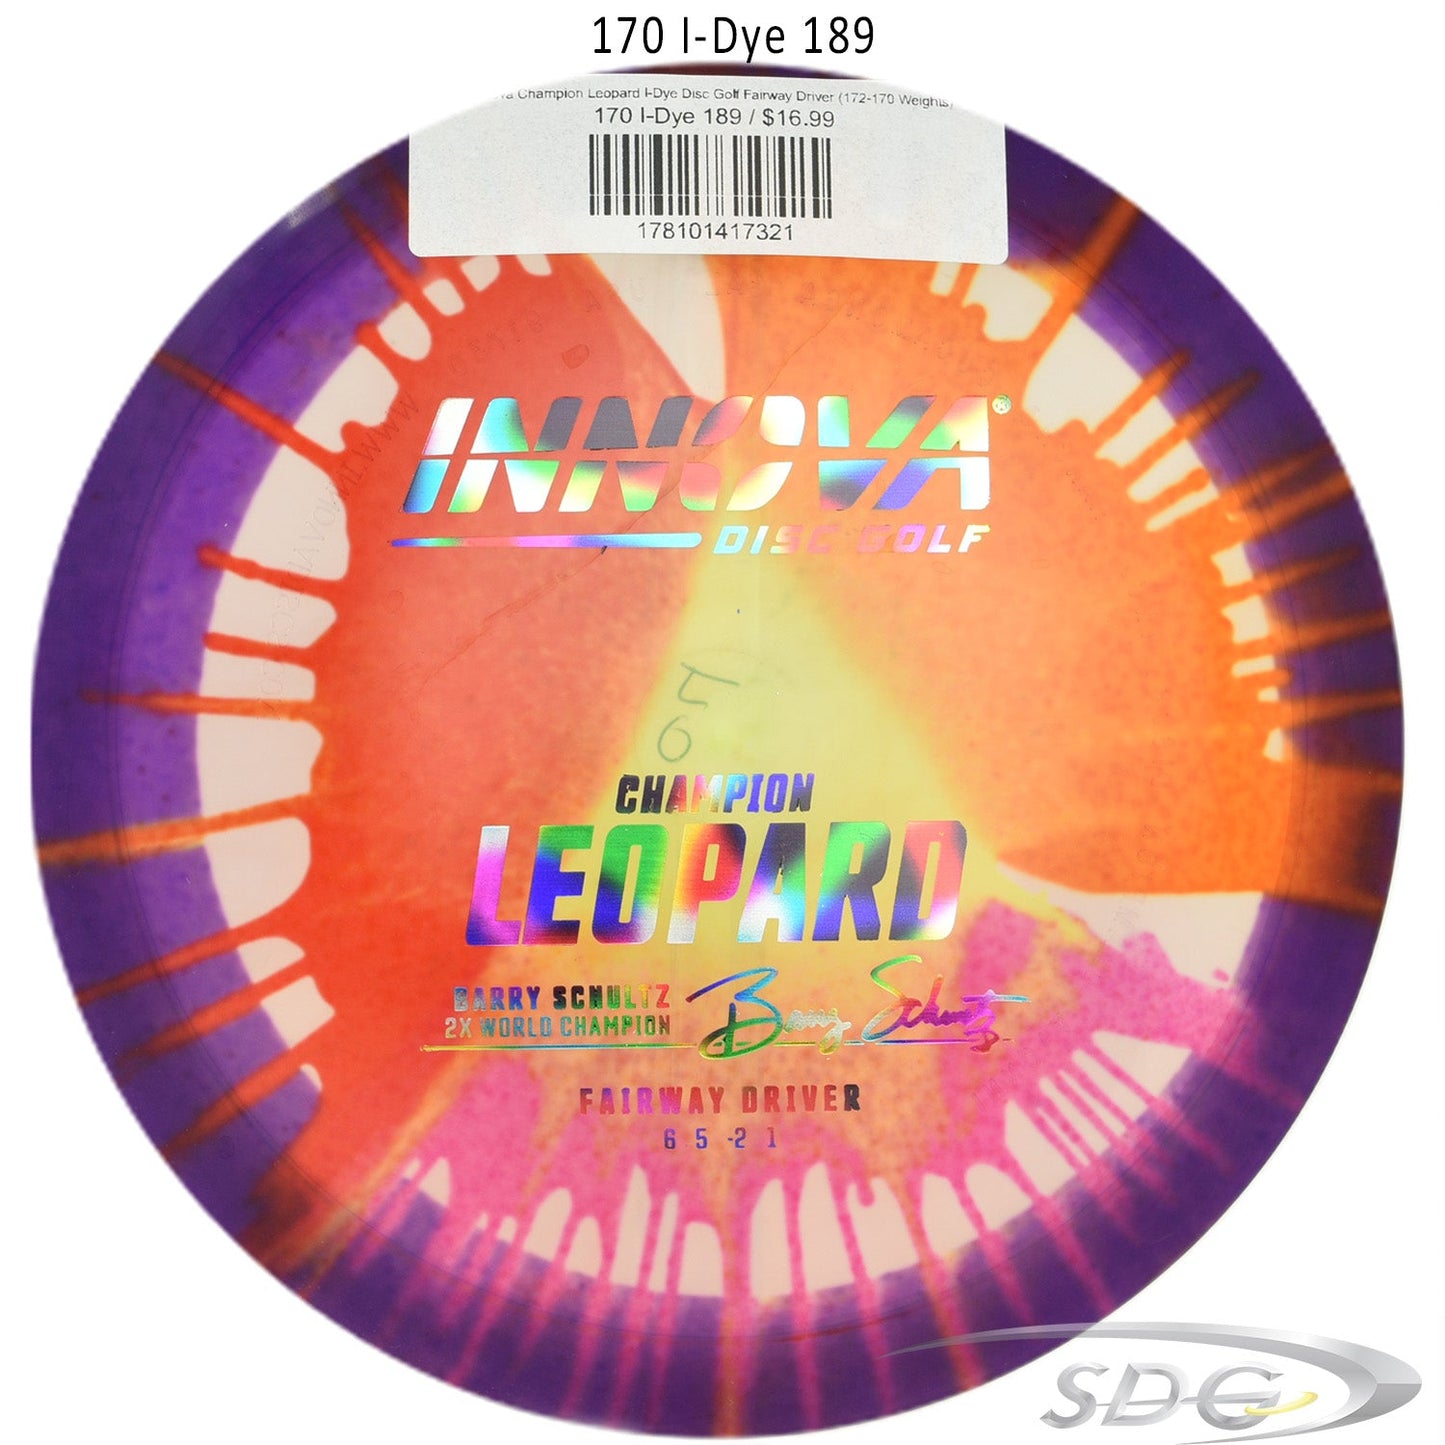 innova-champion-leopard-i-dye-disc-golf-fairway-driver 170 I-Dye 189 